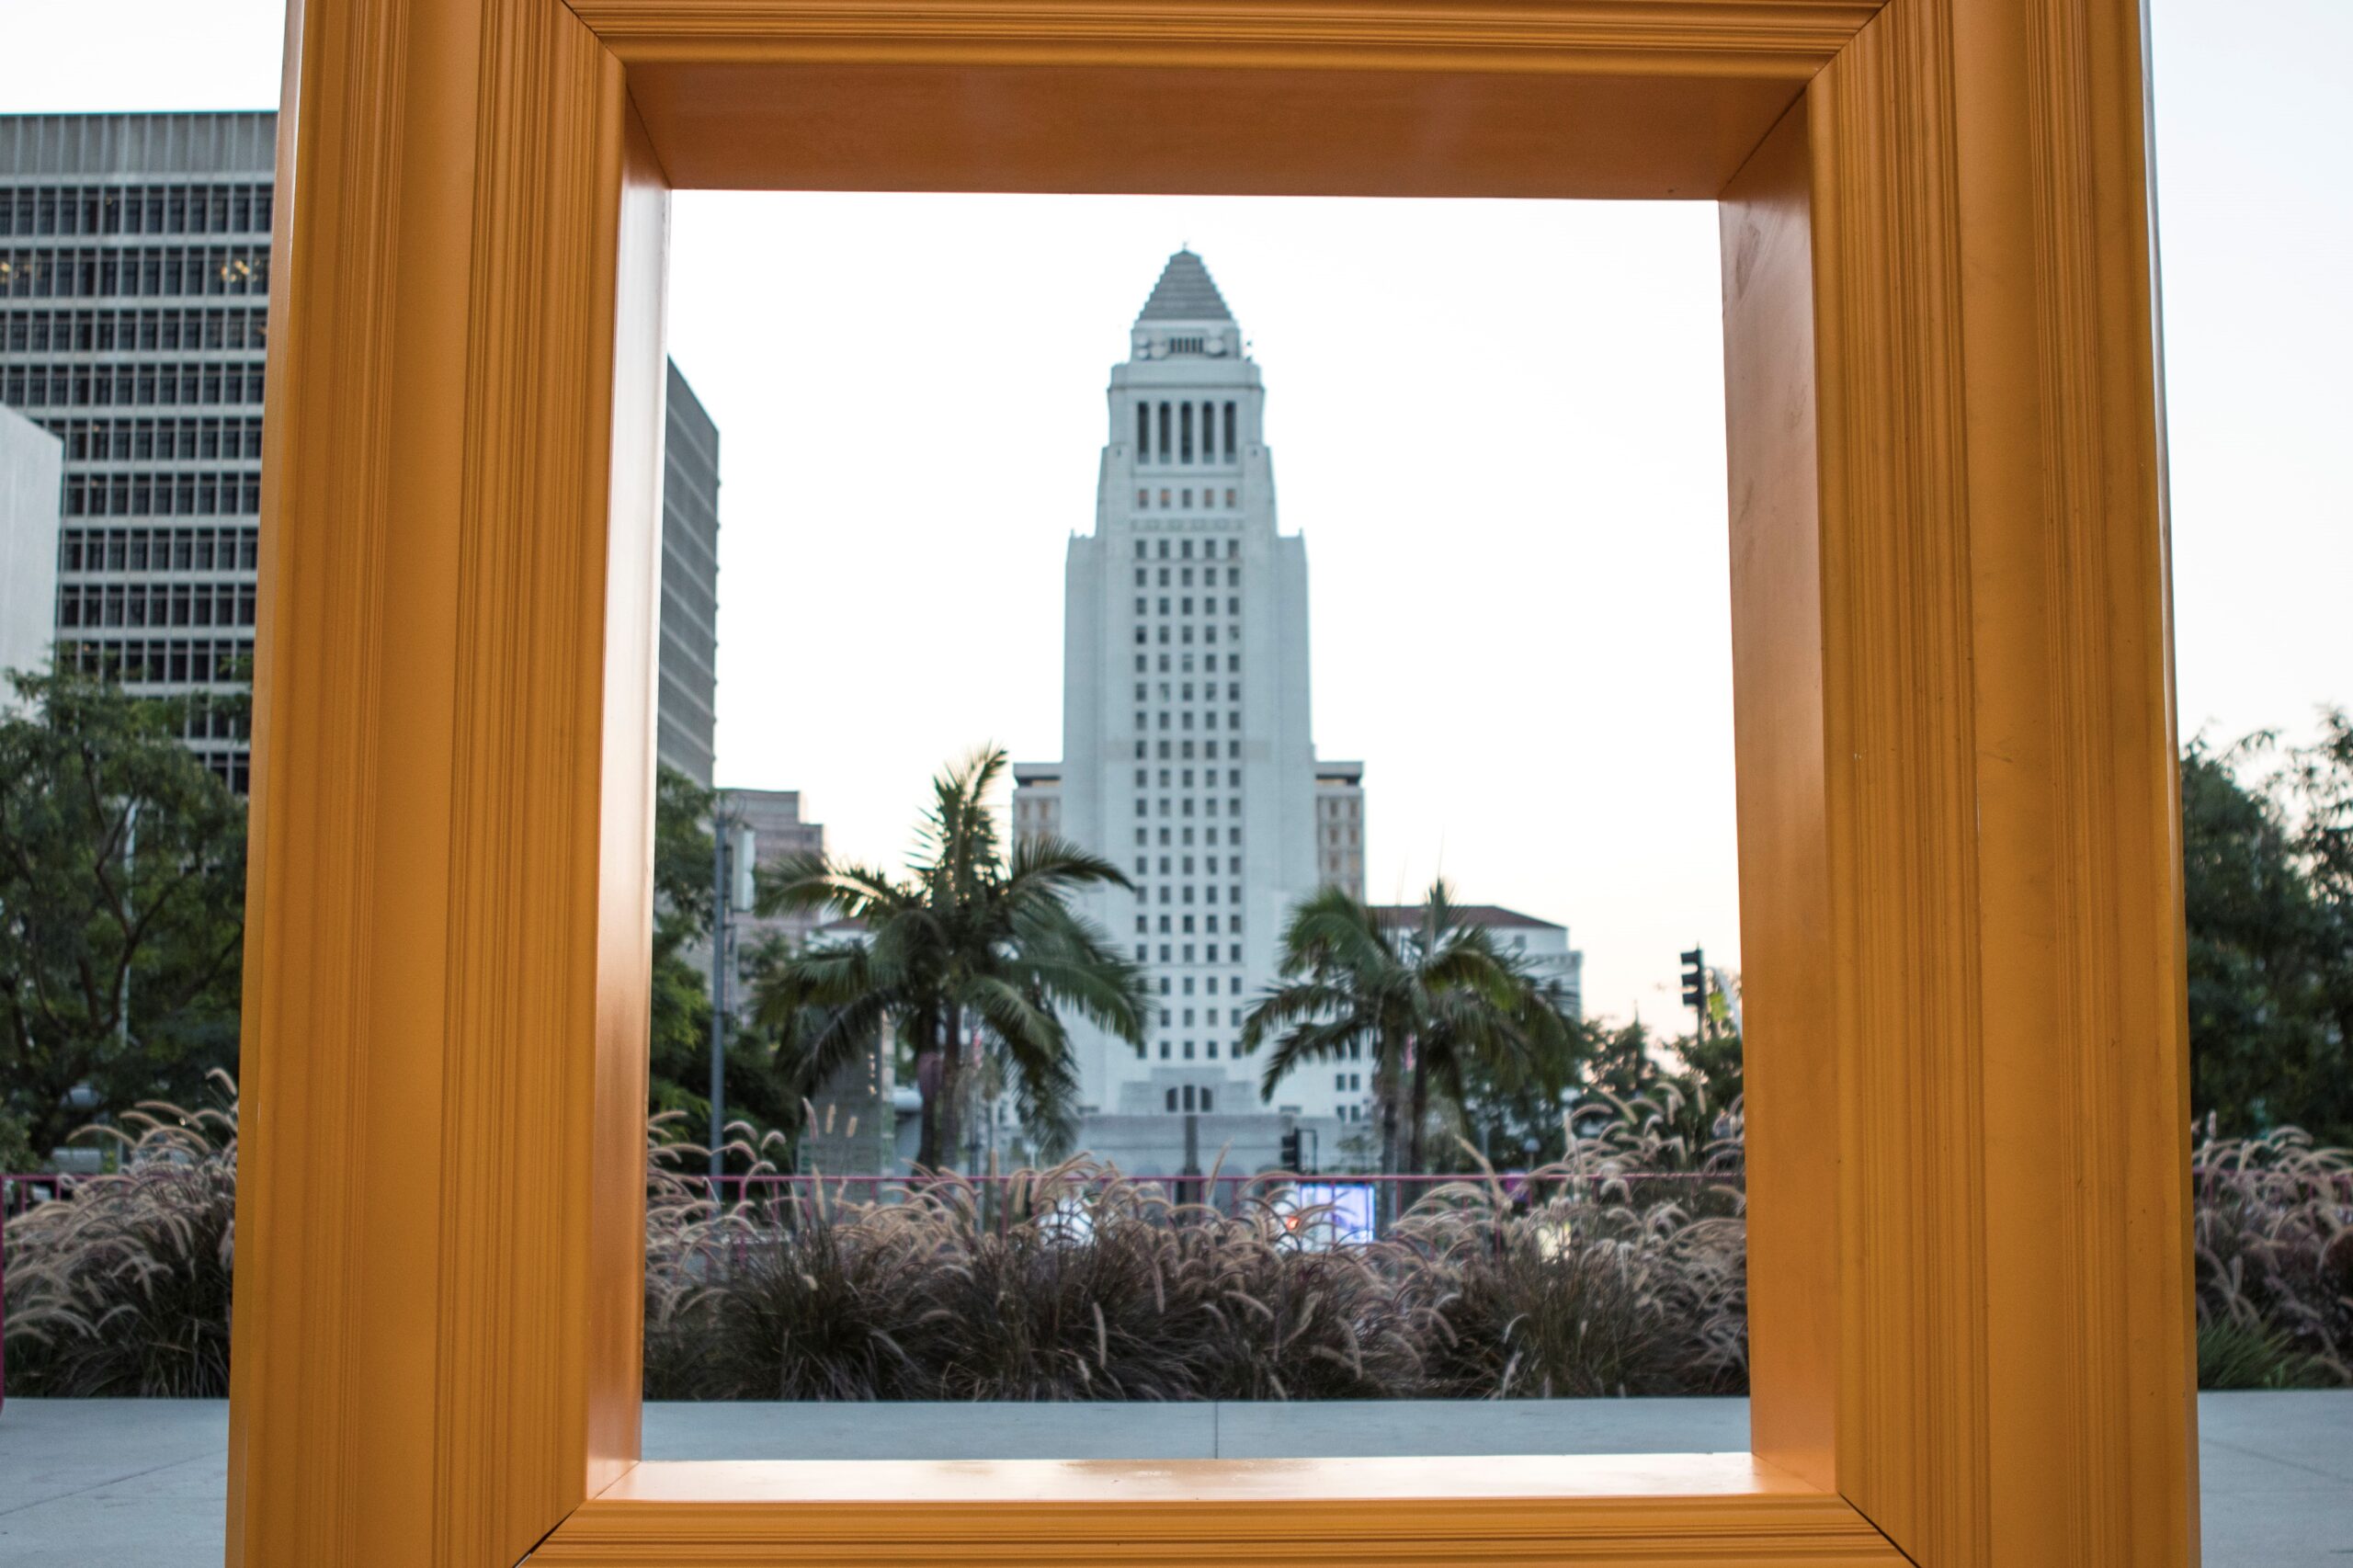 LA City Hall through a wooden frame